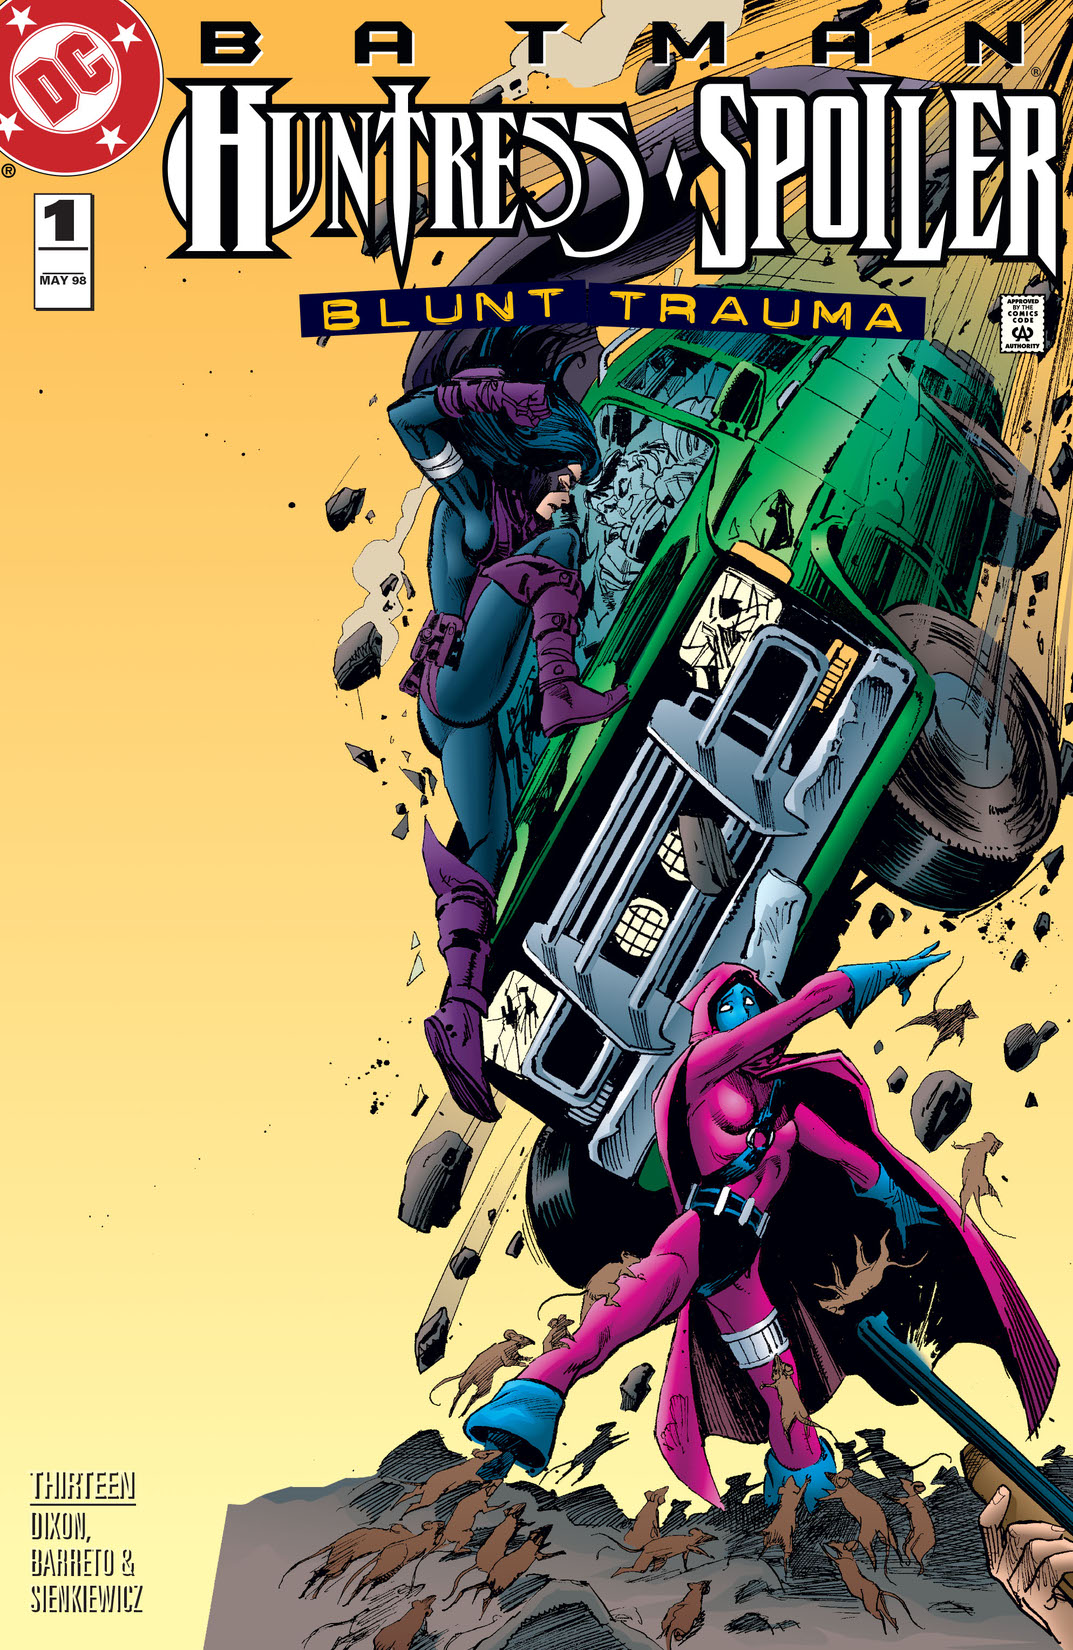 Batman: Huntress/Spoiler - Blunt Trauma #1 preview images